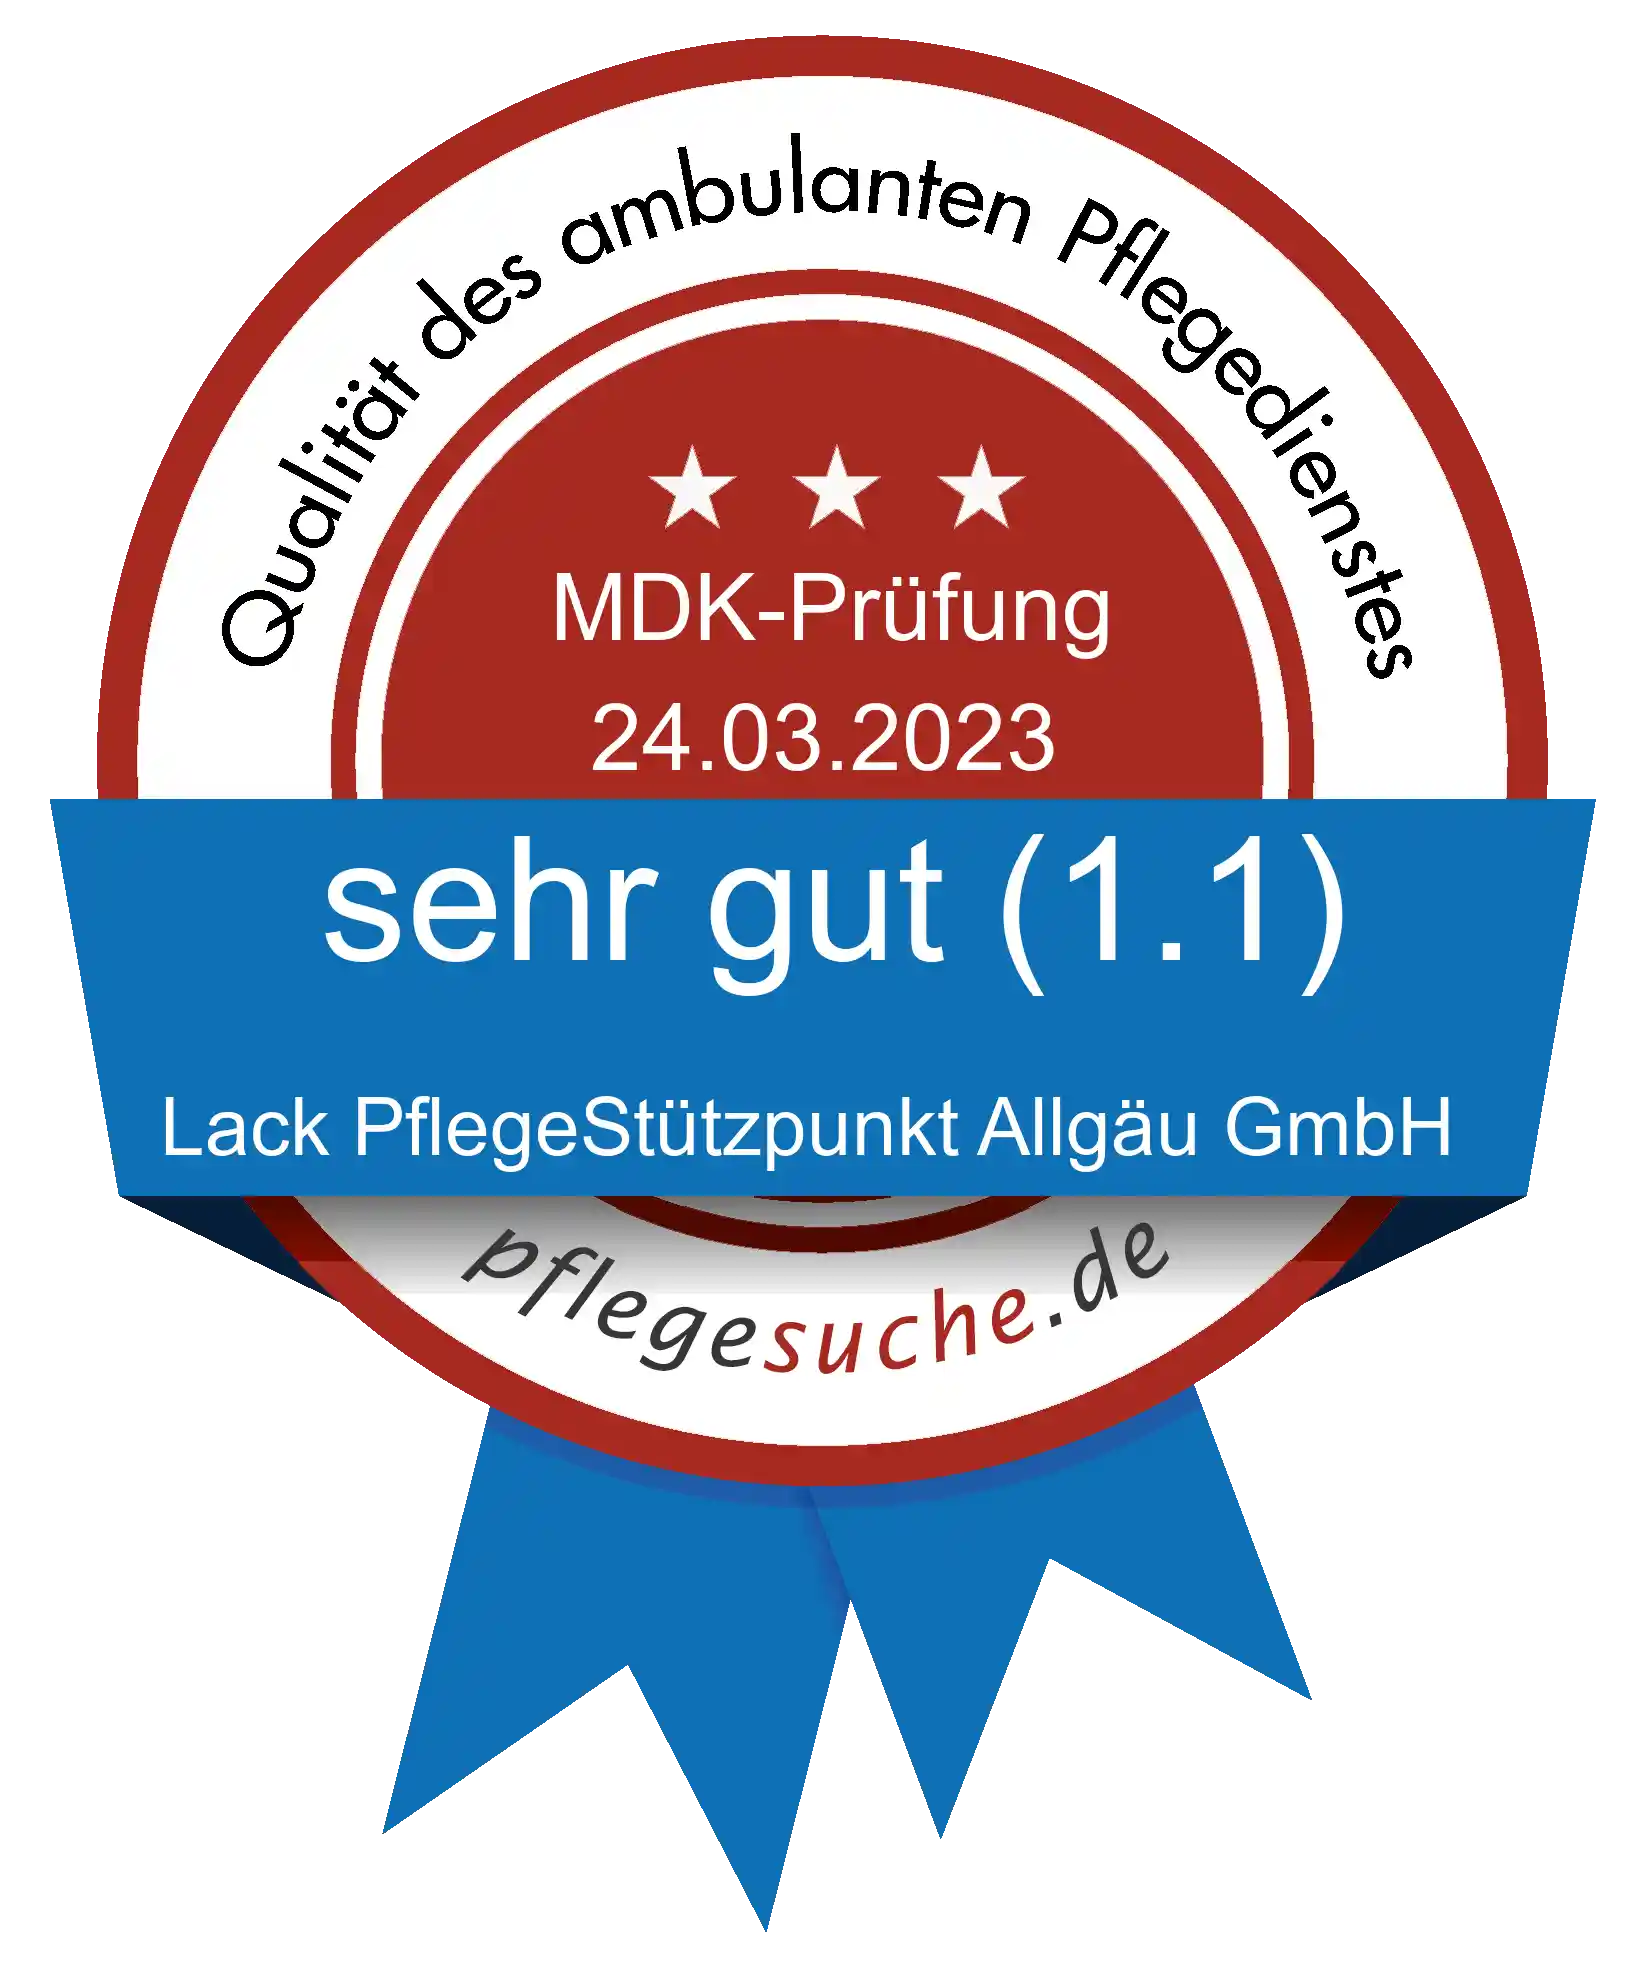 Siegel Benotung: Lack PflegeStützpunkt Allgäu GmbH